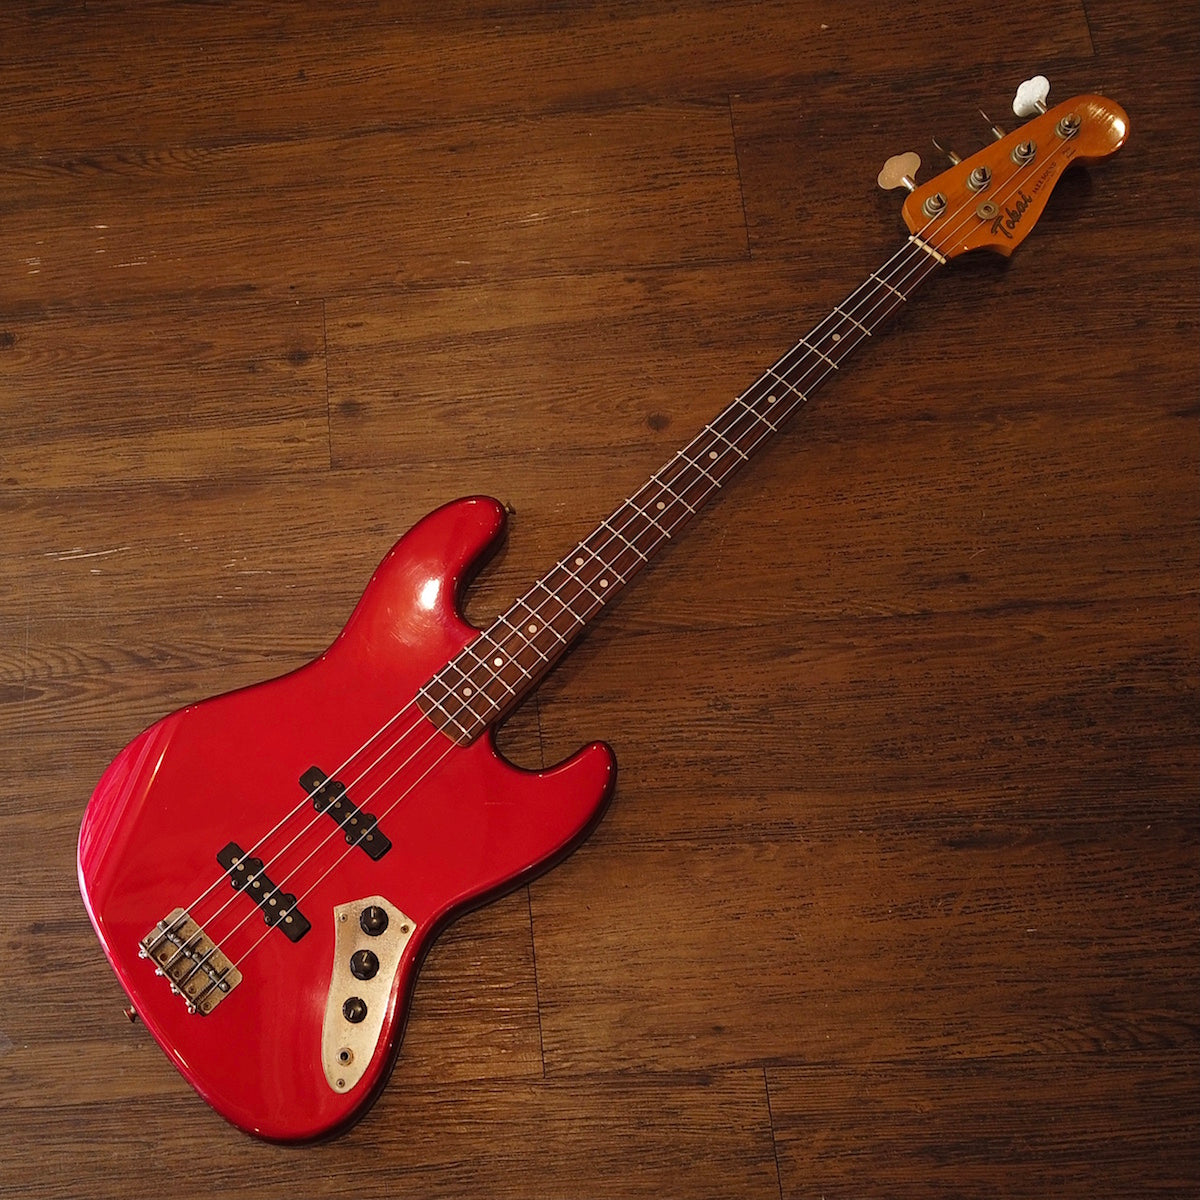 Tokai jazz sound JB-45 Bass Guitar -GrunSound-b426-